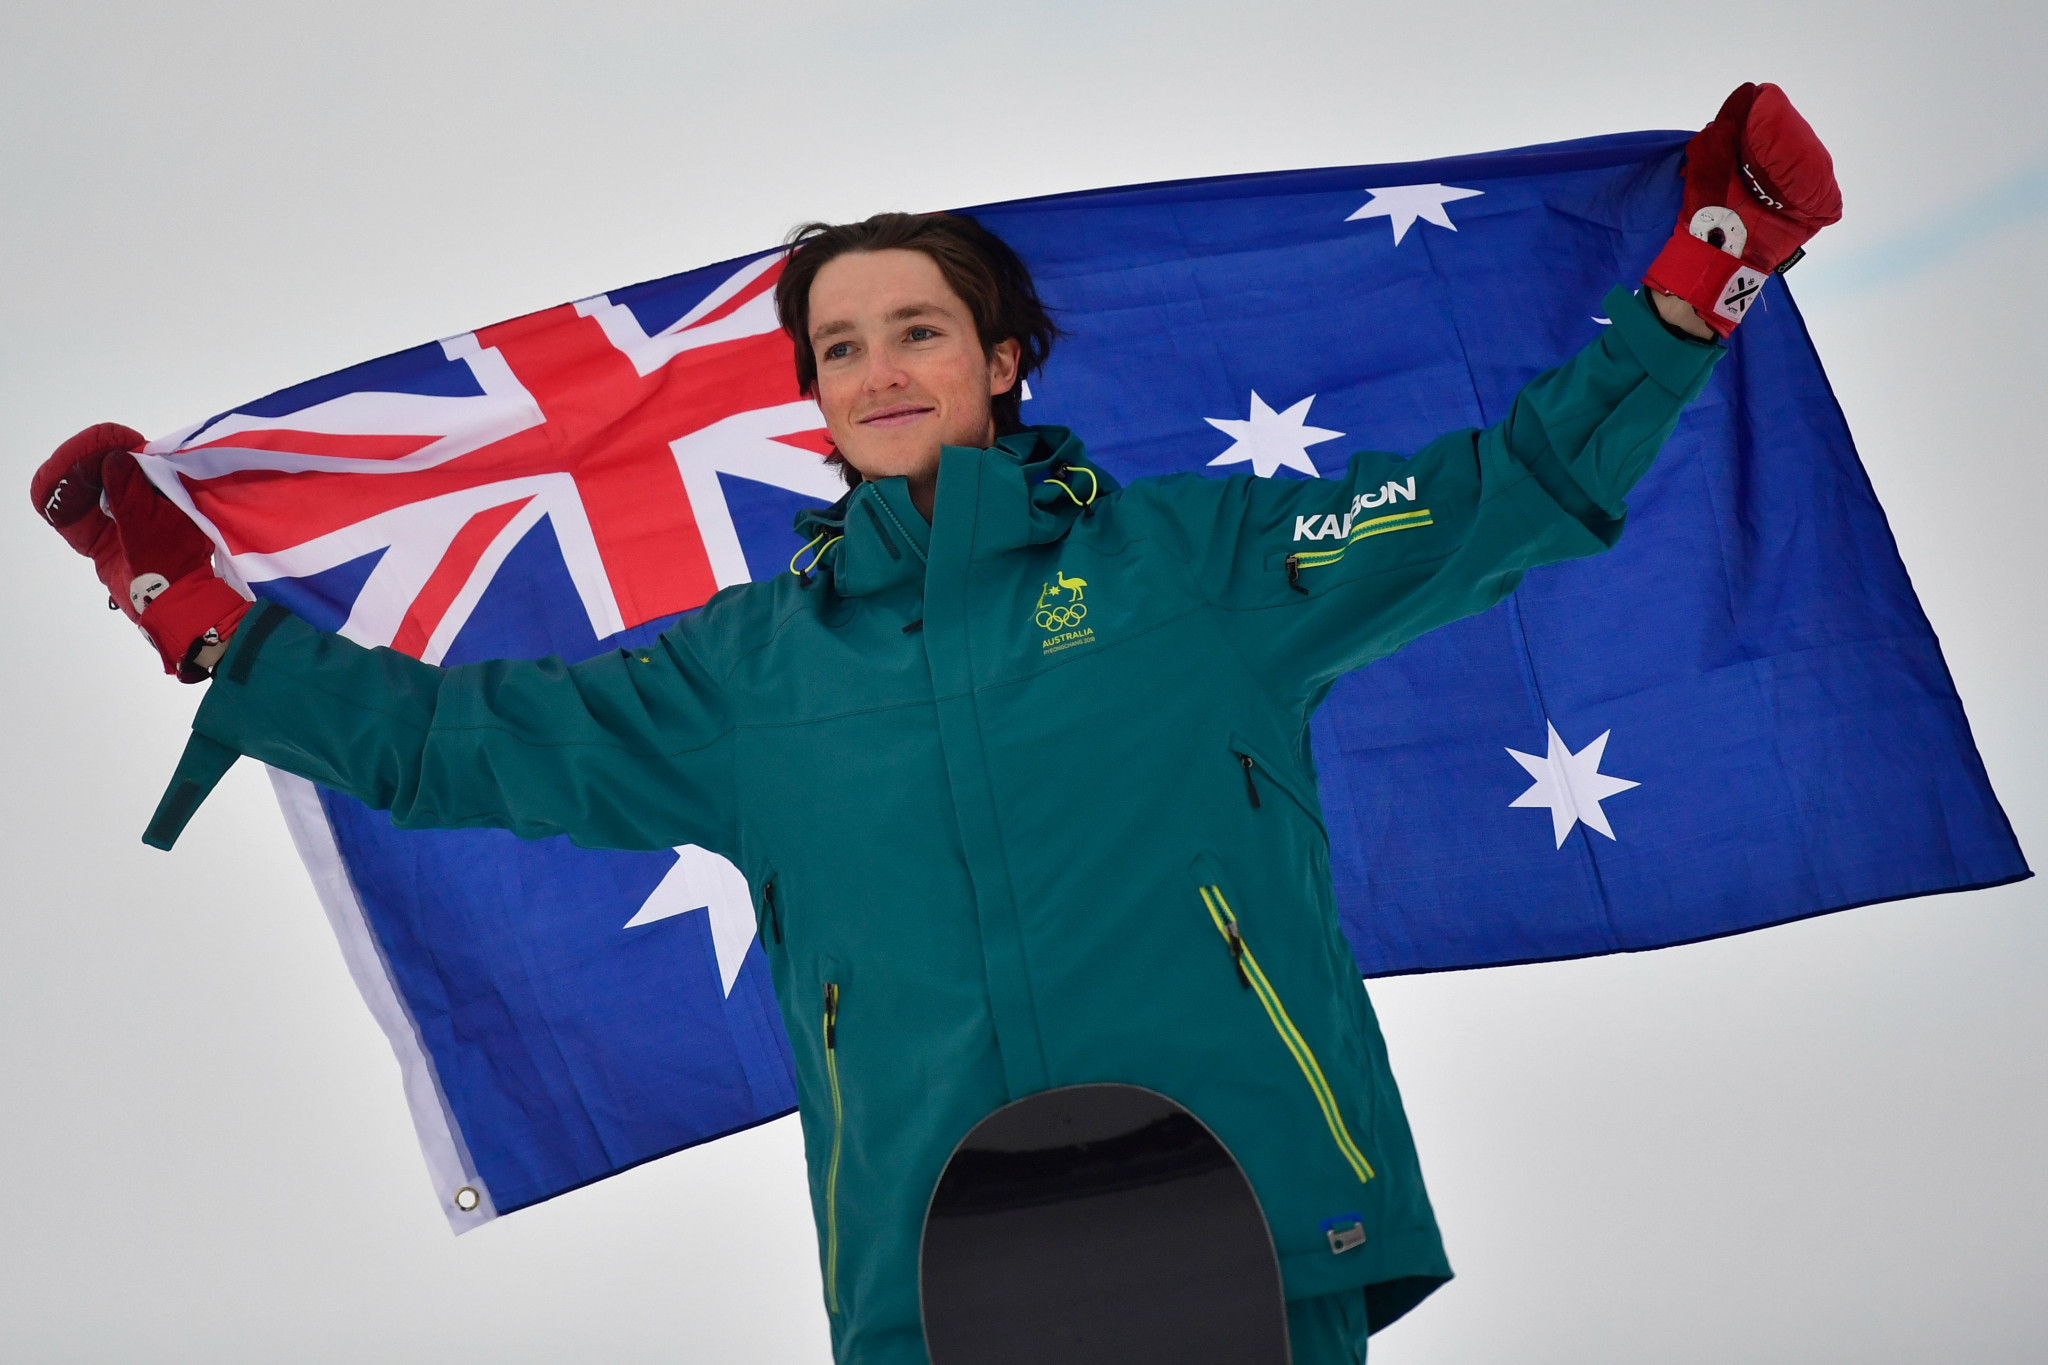 Australia's Winter Olympians take oath recalling nation's history